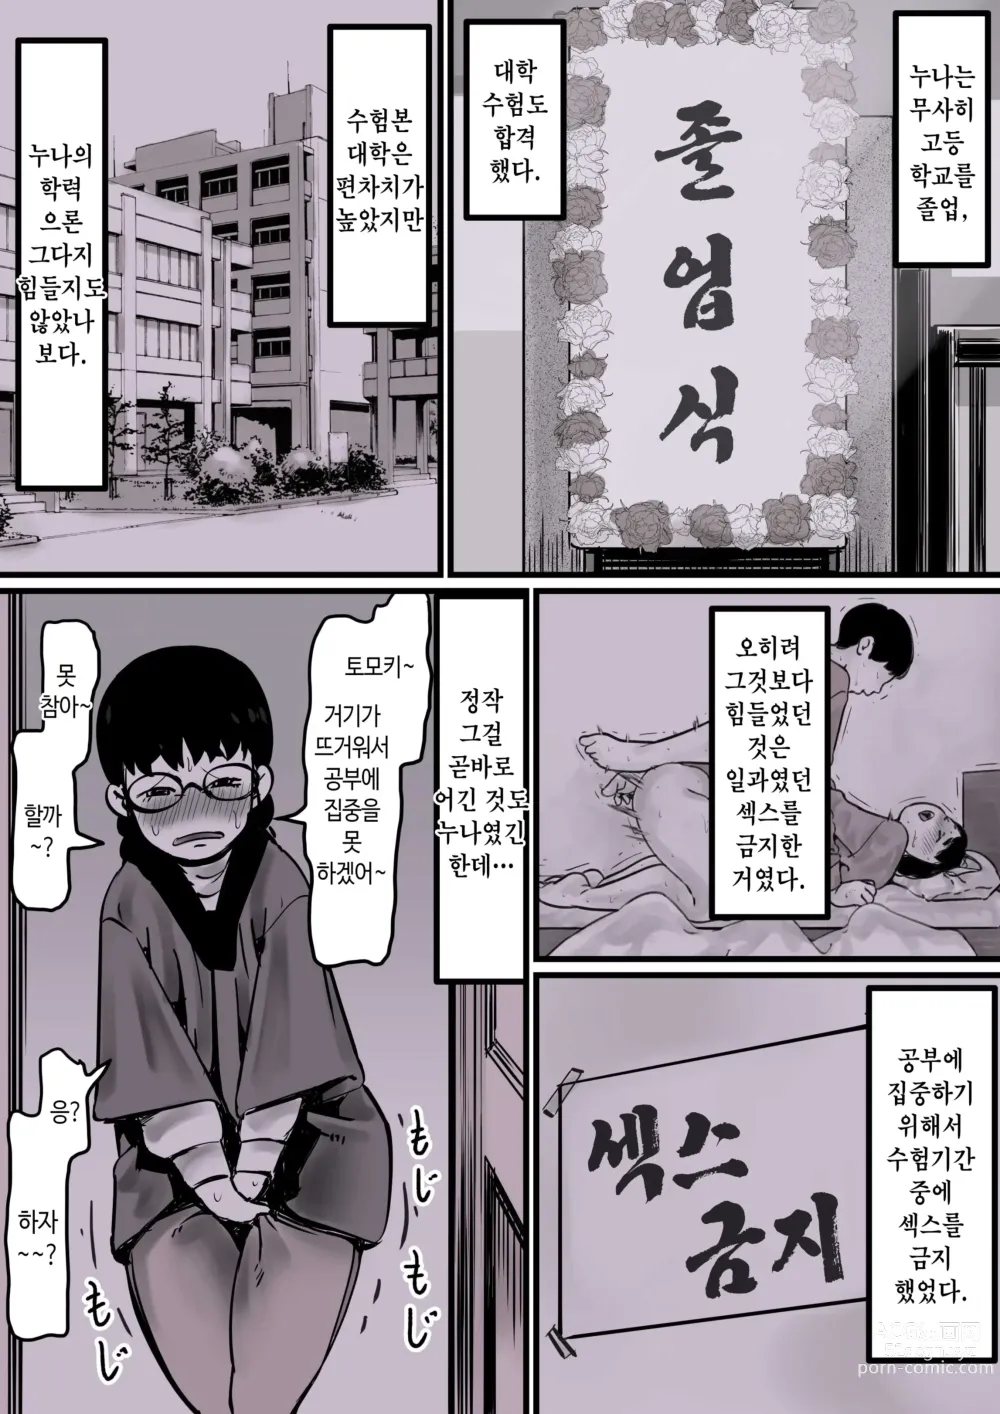 Page 4 of doujinshi 엄마와 함께 타락해 간다